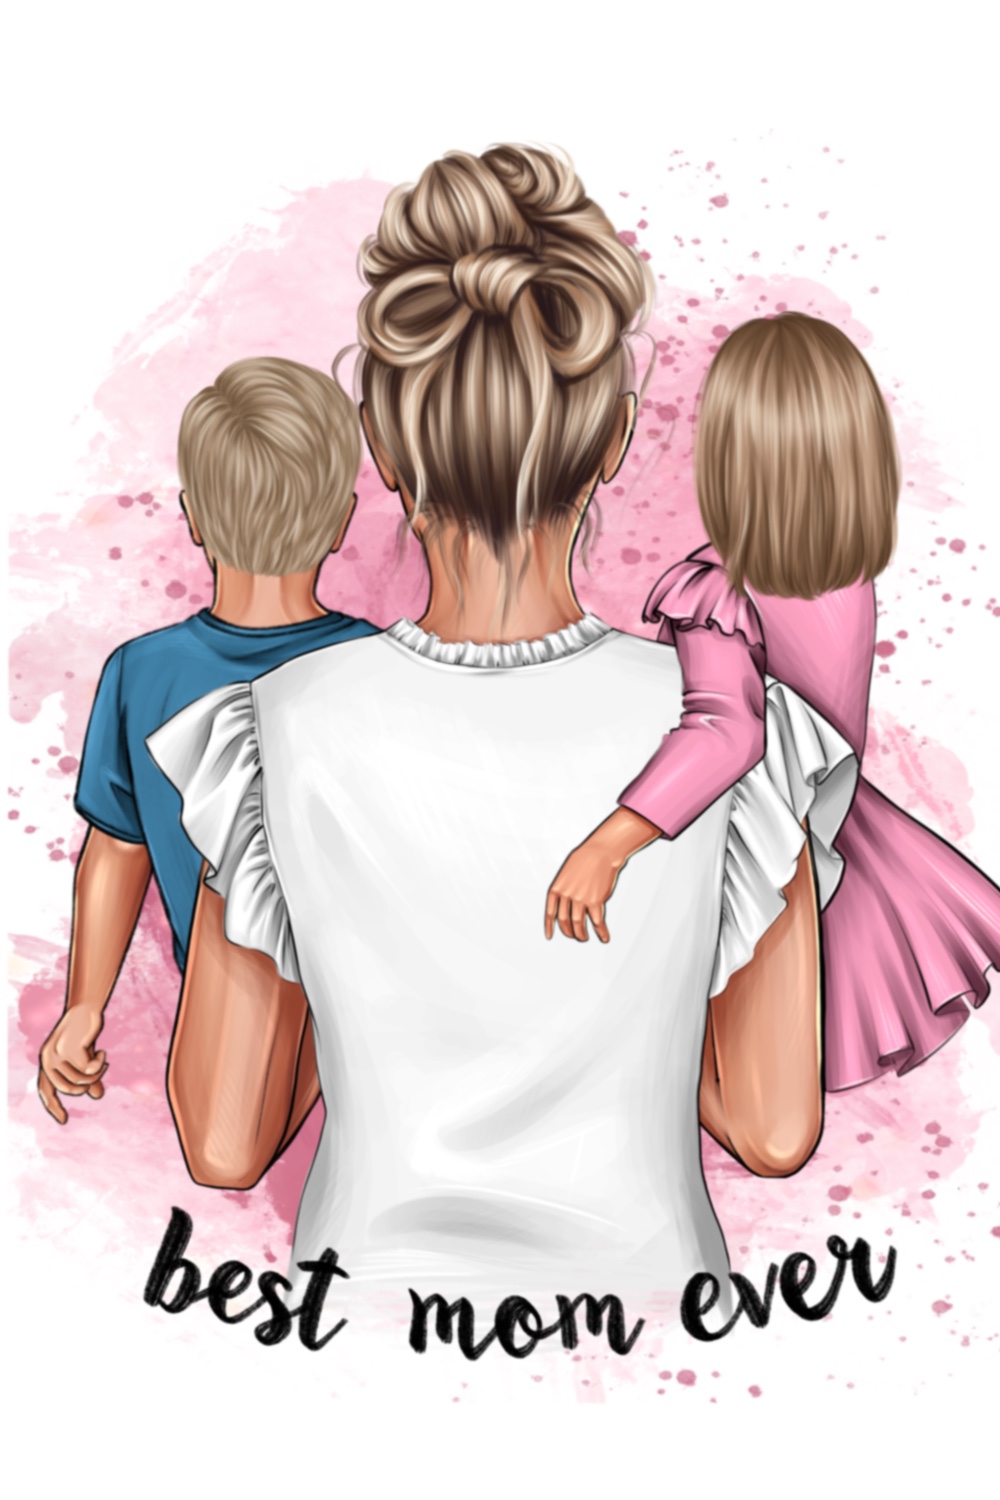 Best Mom And Children Family Clipart Pinterest Image.